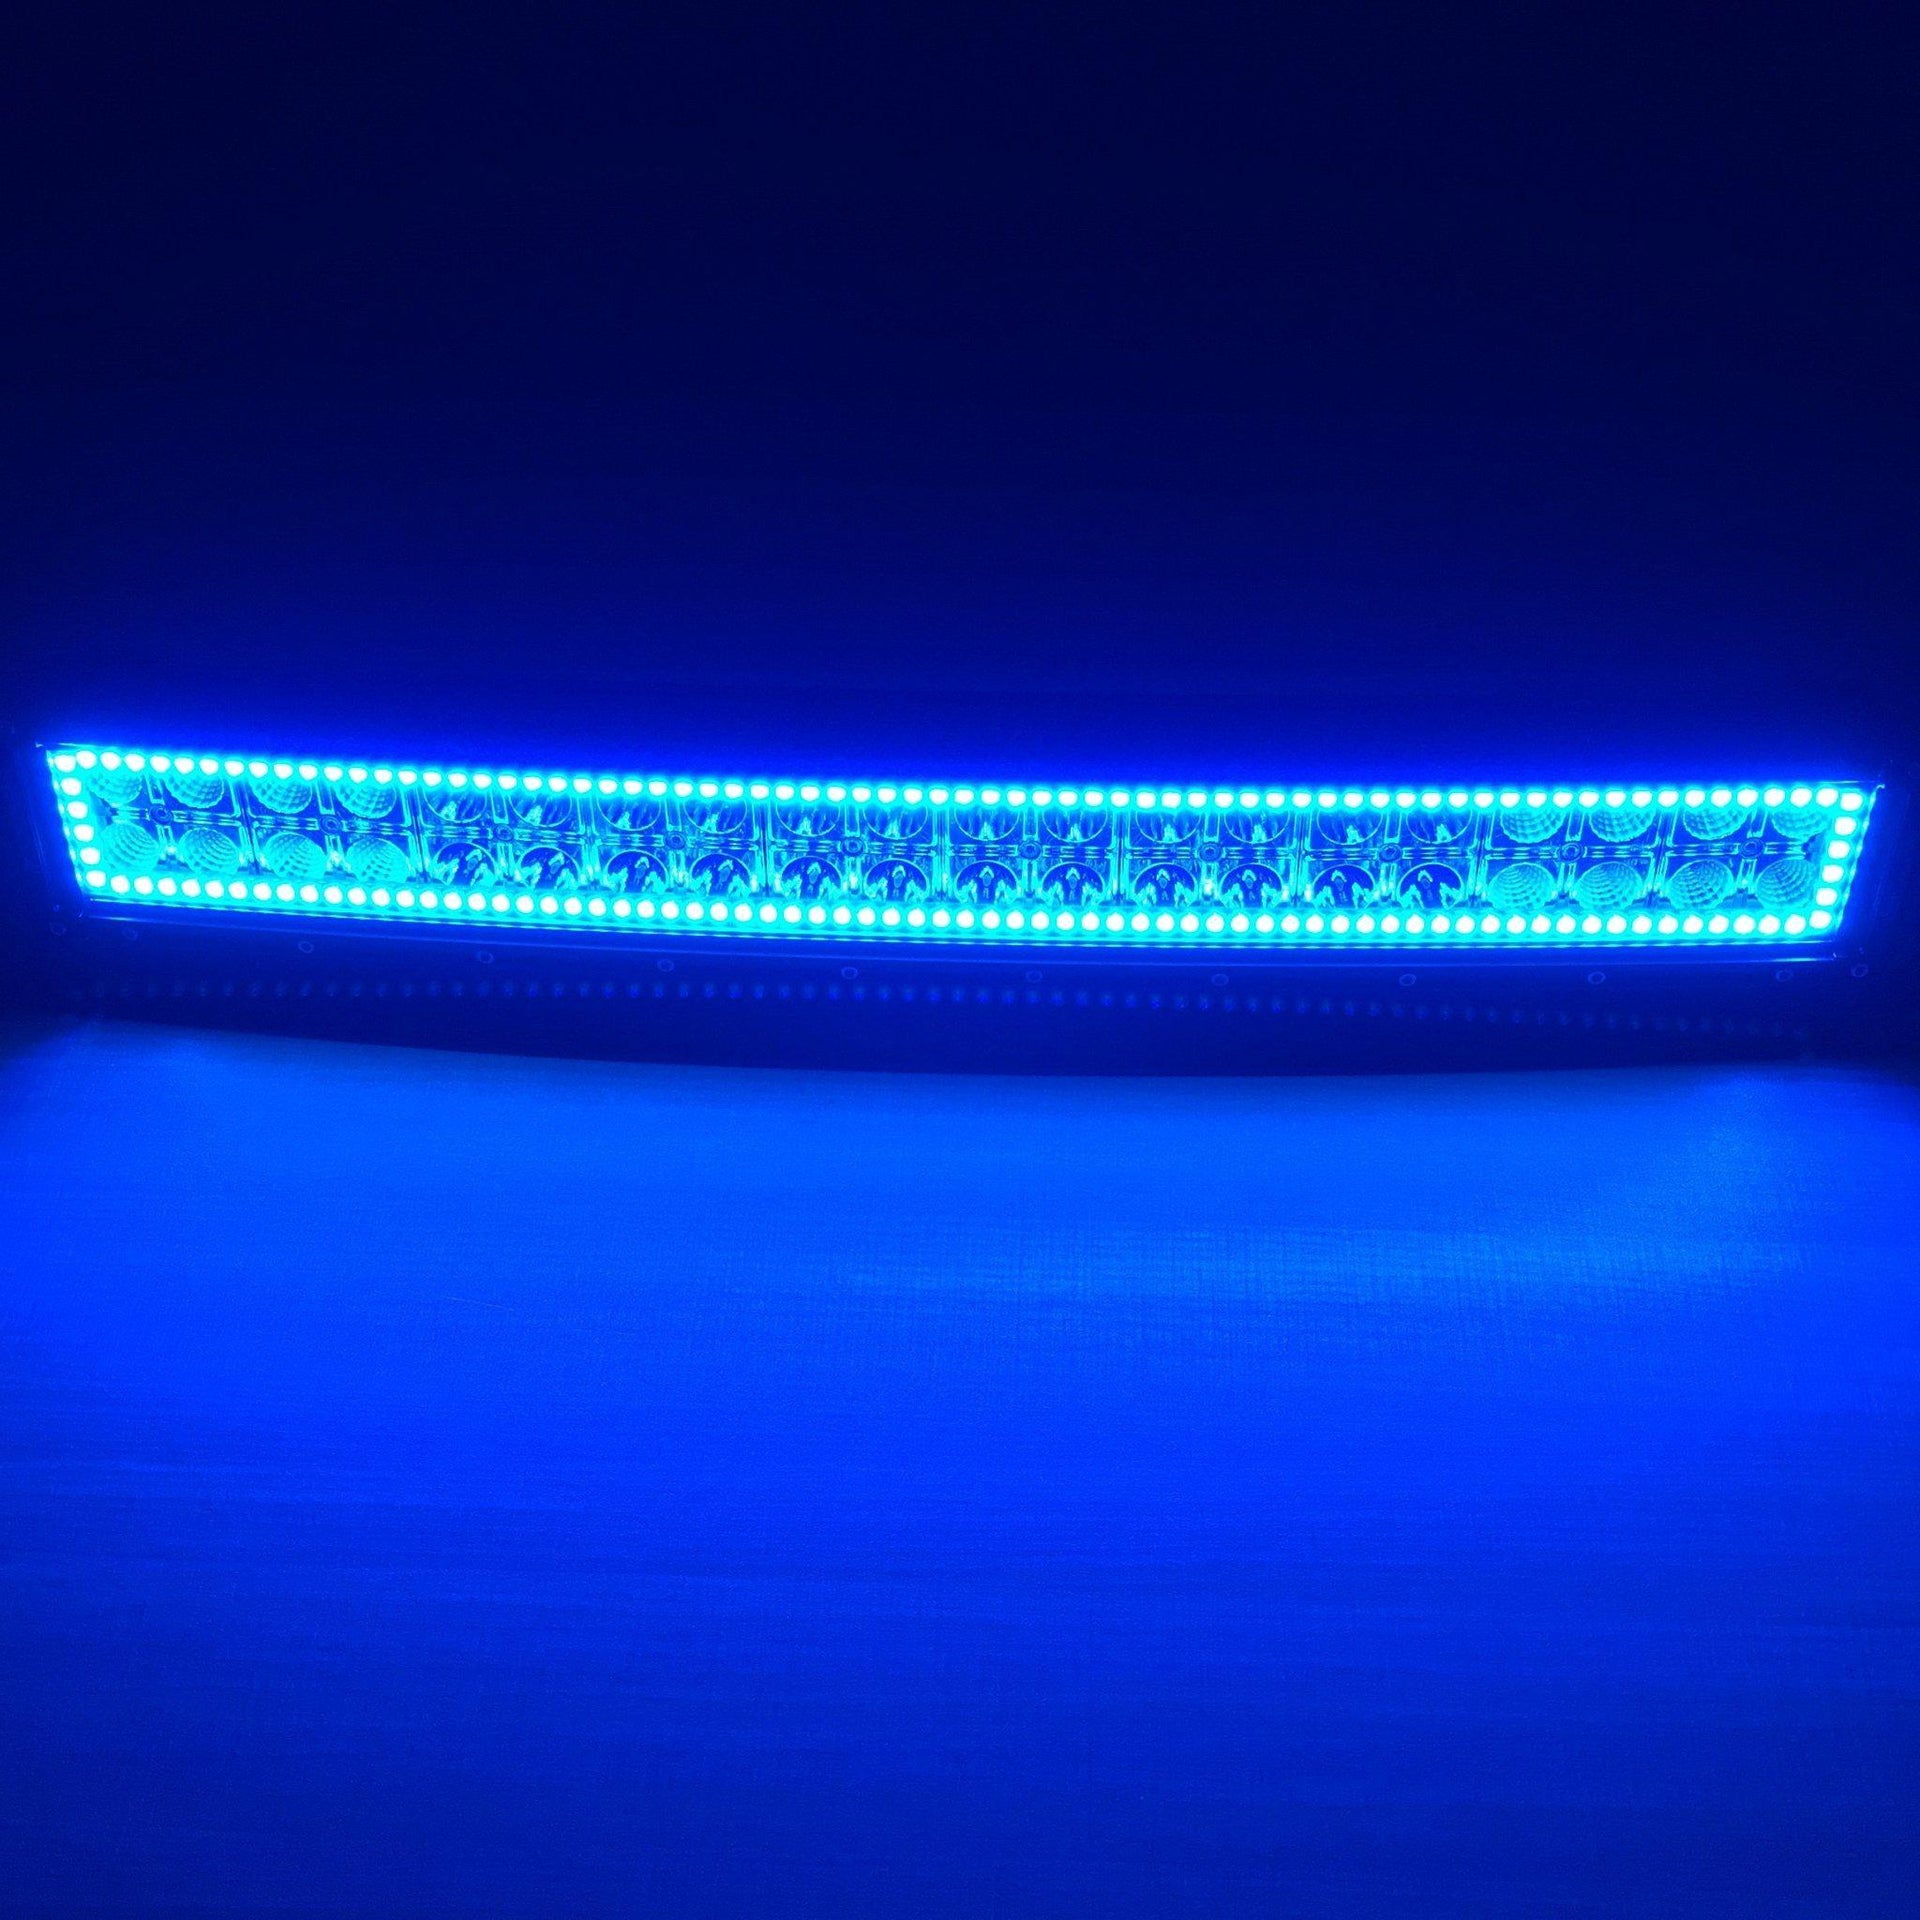 21.5" RGB Halo Curved Light Bar With Bluetooth Remote Control-RGB Halo Curved Light Bar-Vivid Light Bars